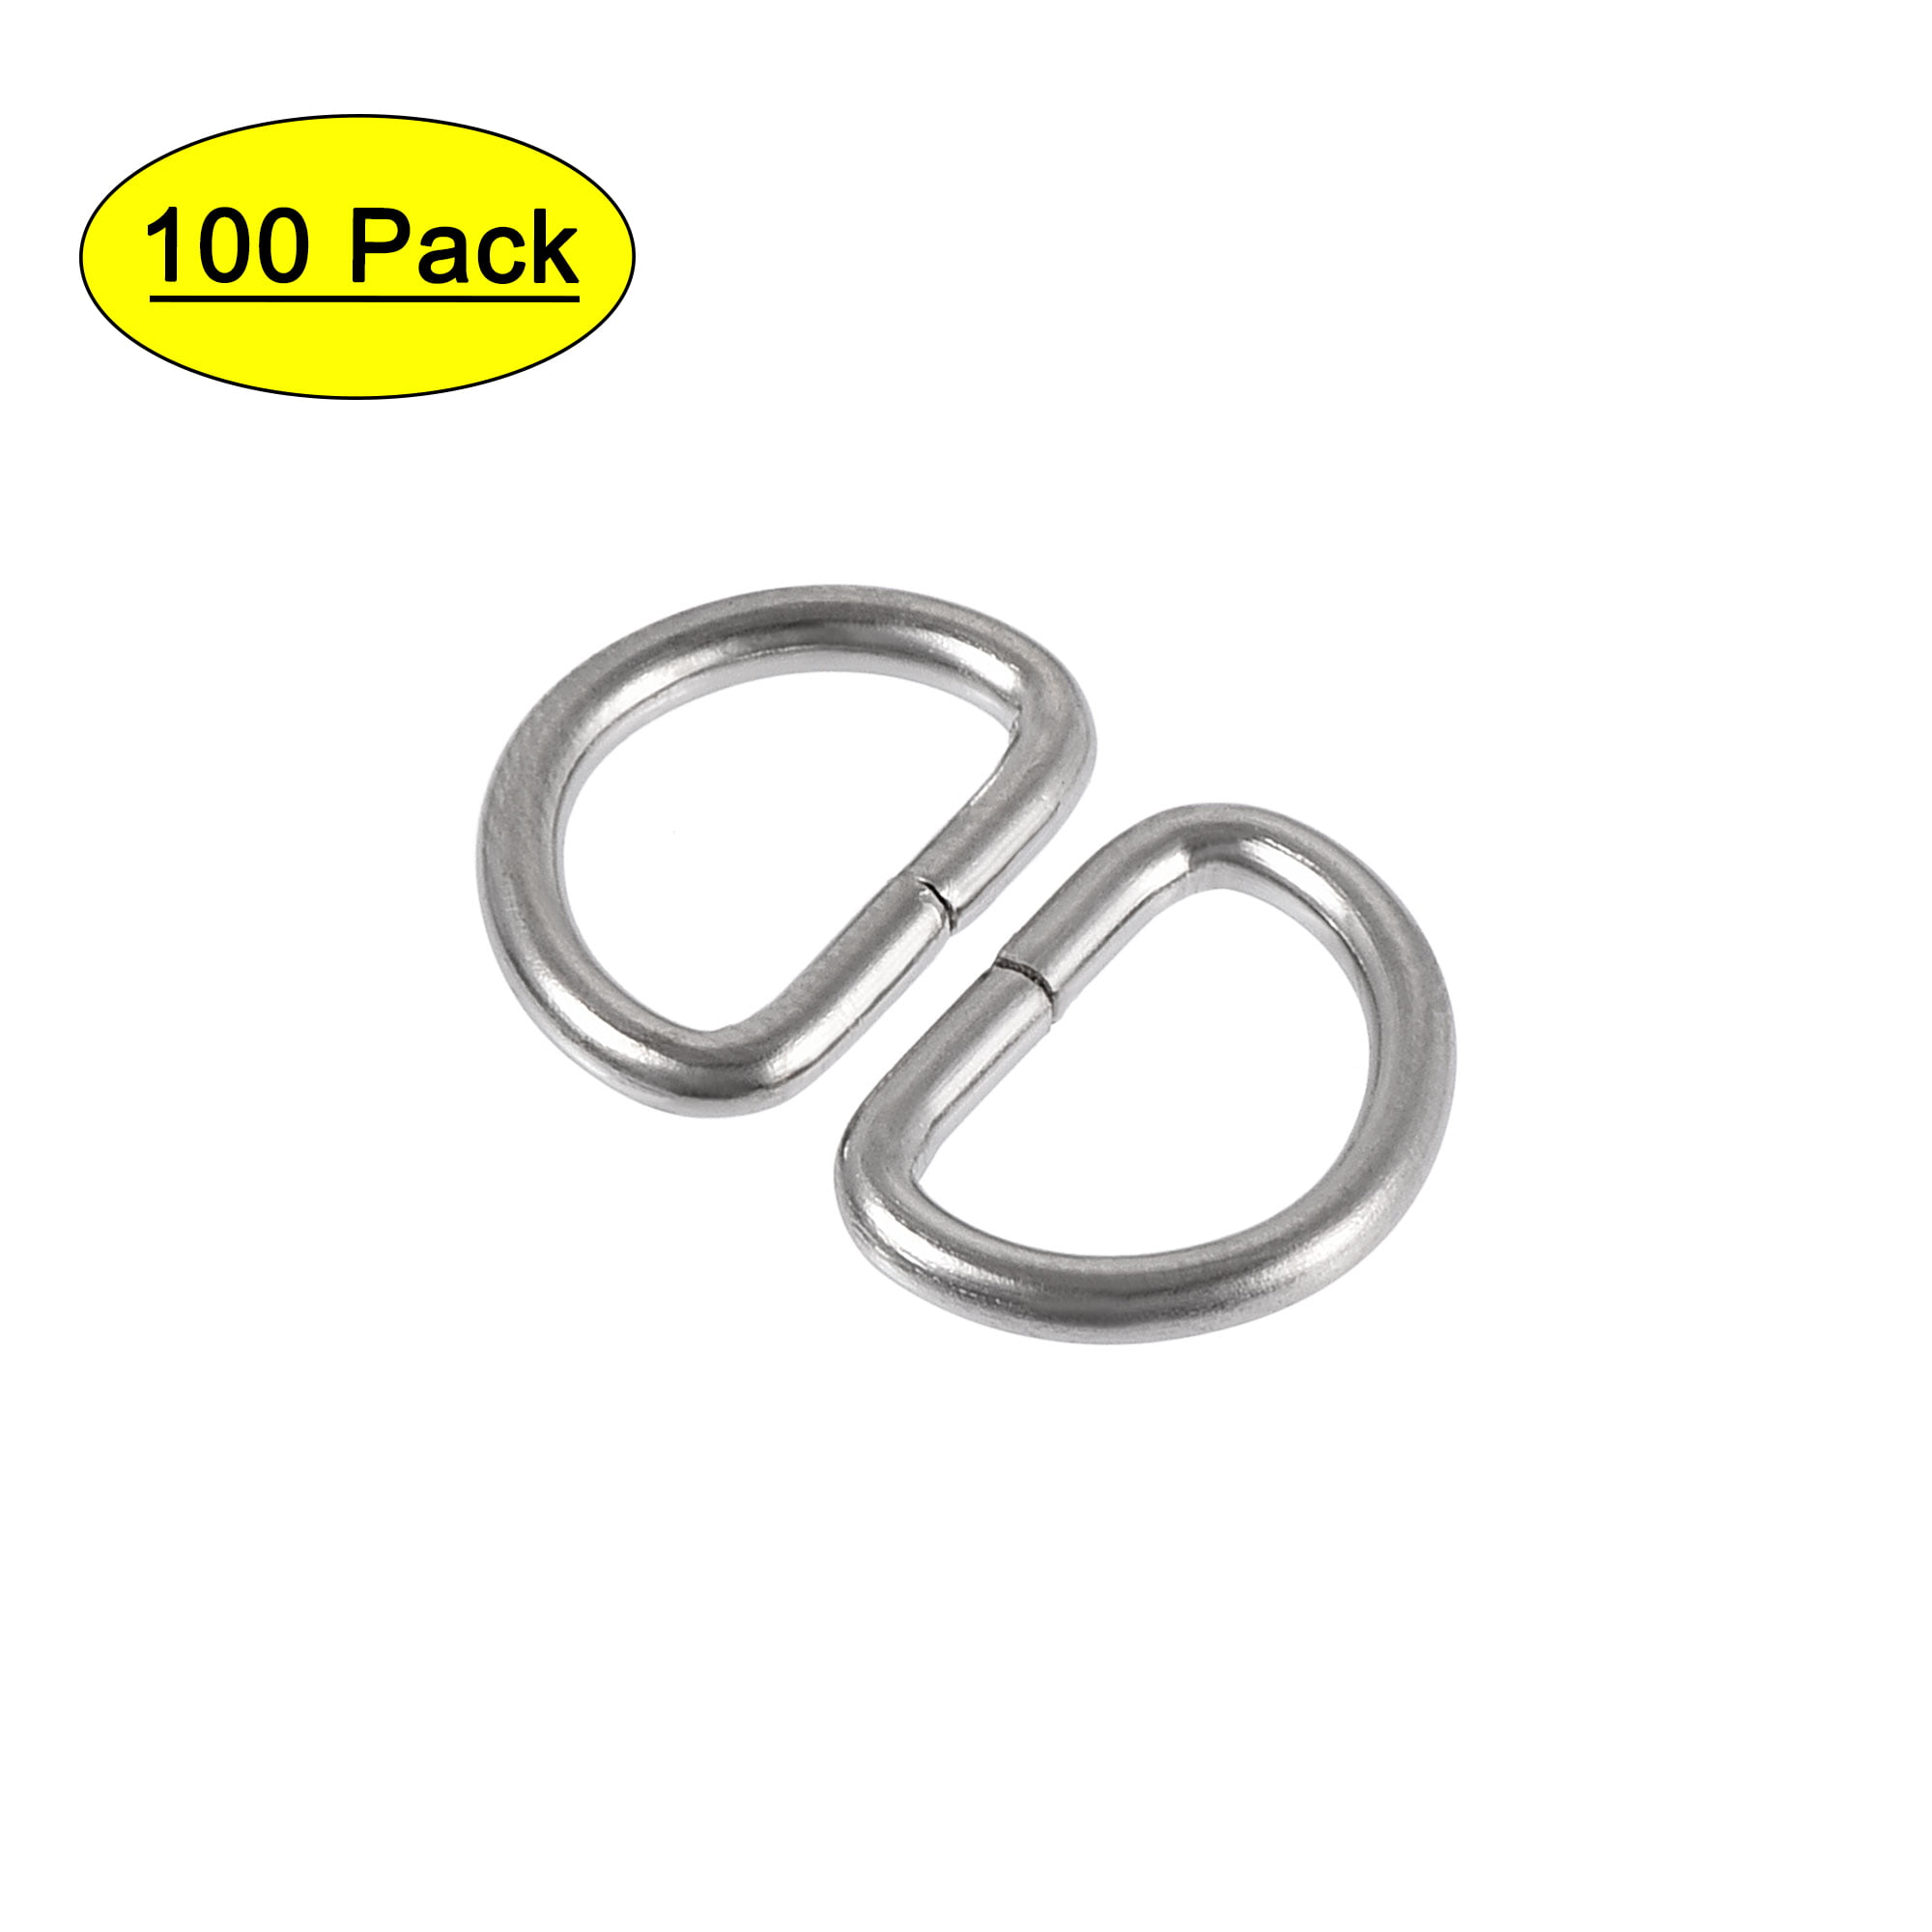 Reusachtig Bemiddelen leerling Metal D Ring 0.39"(10mm) D-Rings Buckle for Hardware Bags Belts Craft DIY  Accessories Silver Tone, 100pcs - Walmart.com